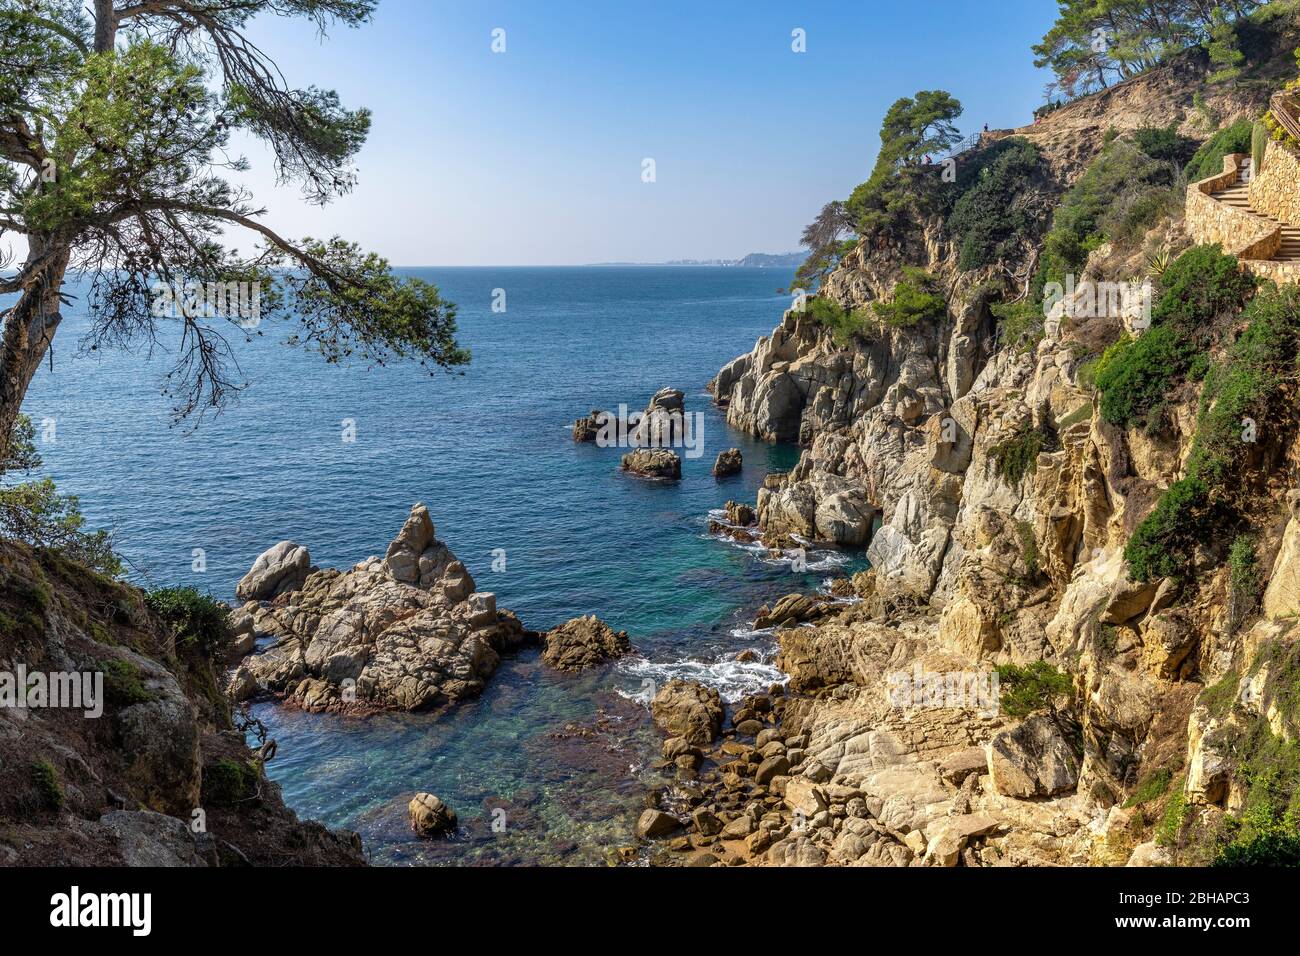 Europe, Spain, Catalonia, Costa Brava, coastal scene on the Costa Brava just before Lloret de Mar Stock Photo